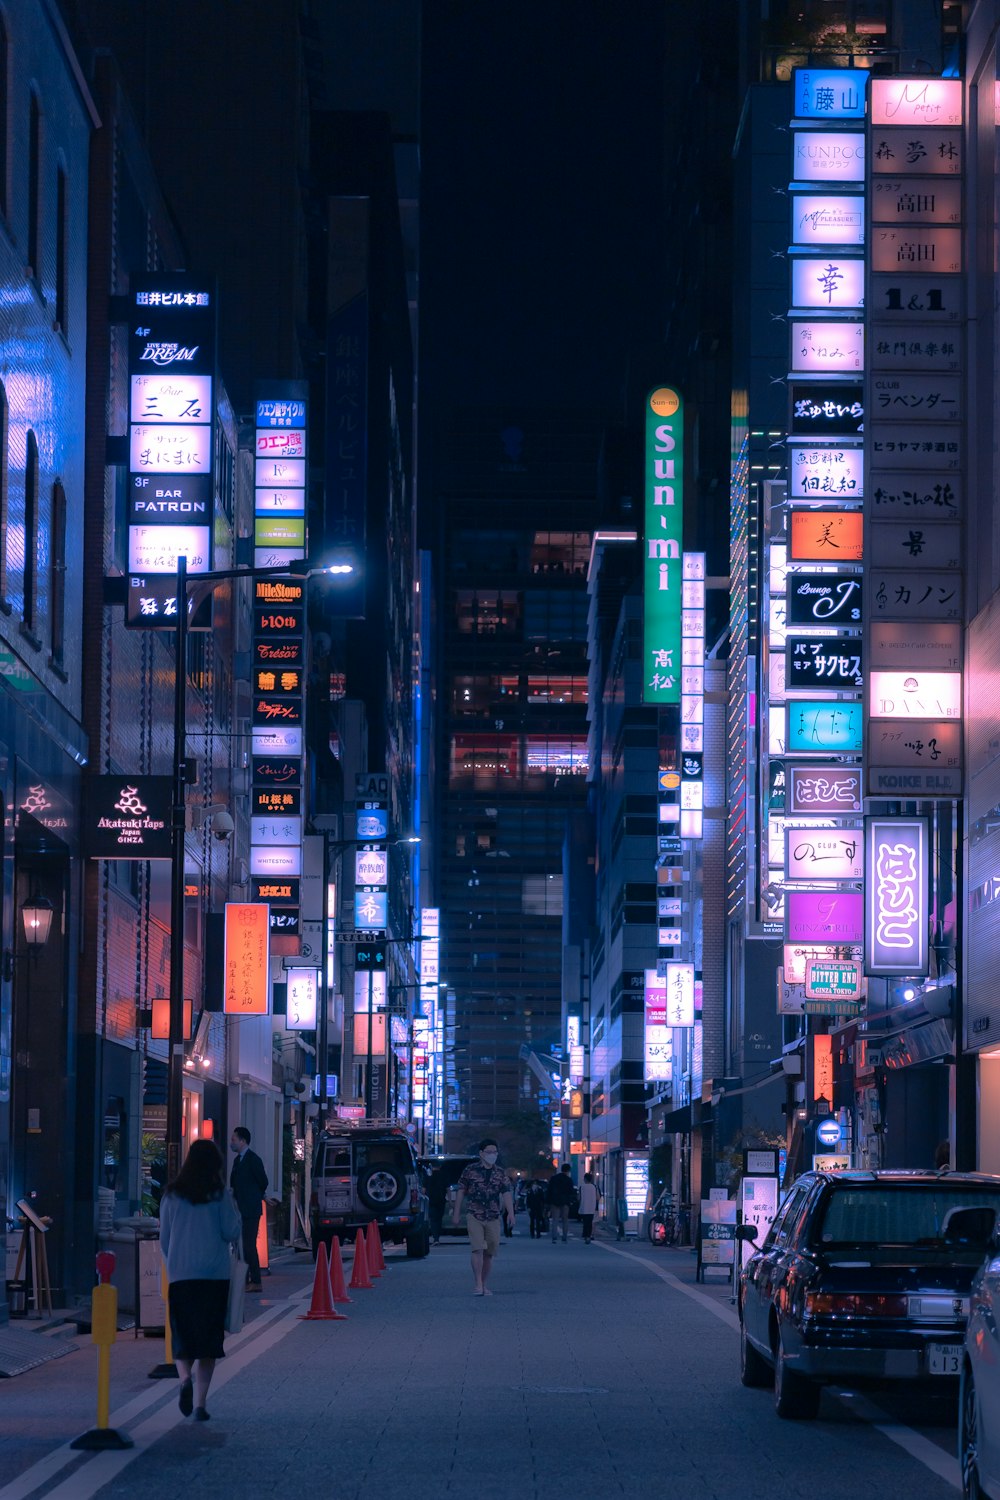 a woman walking down a city street at night